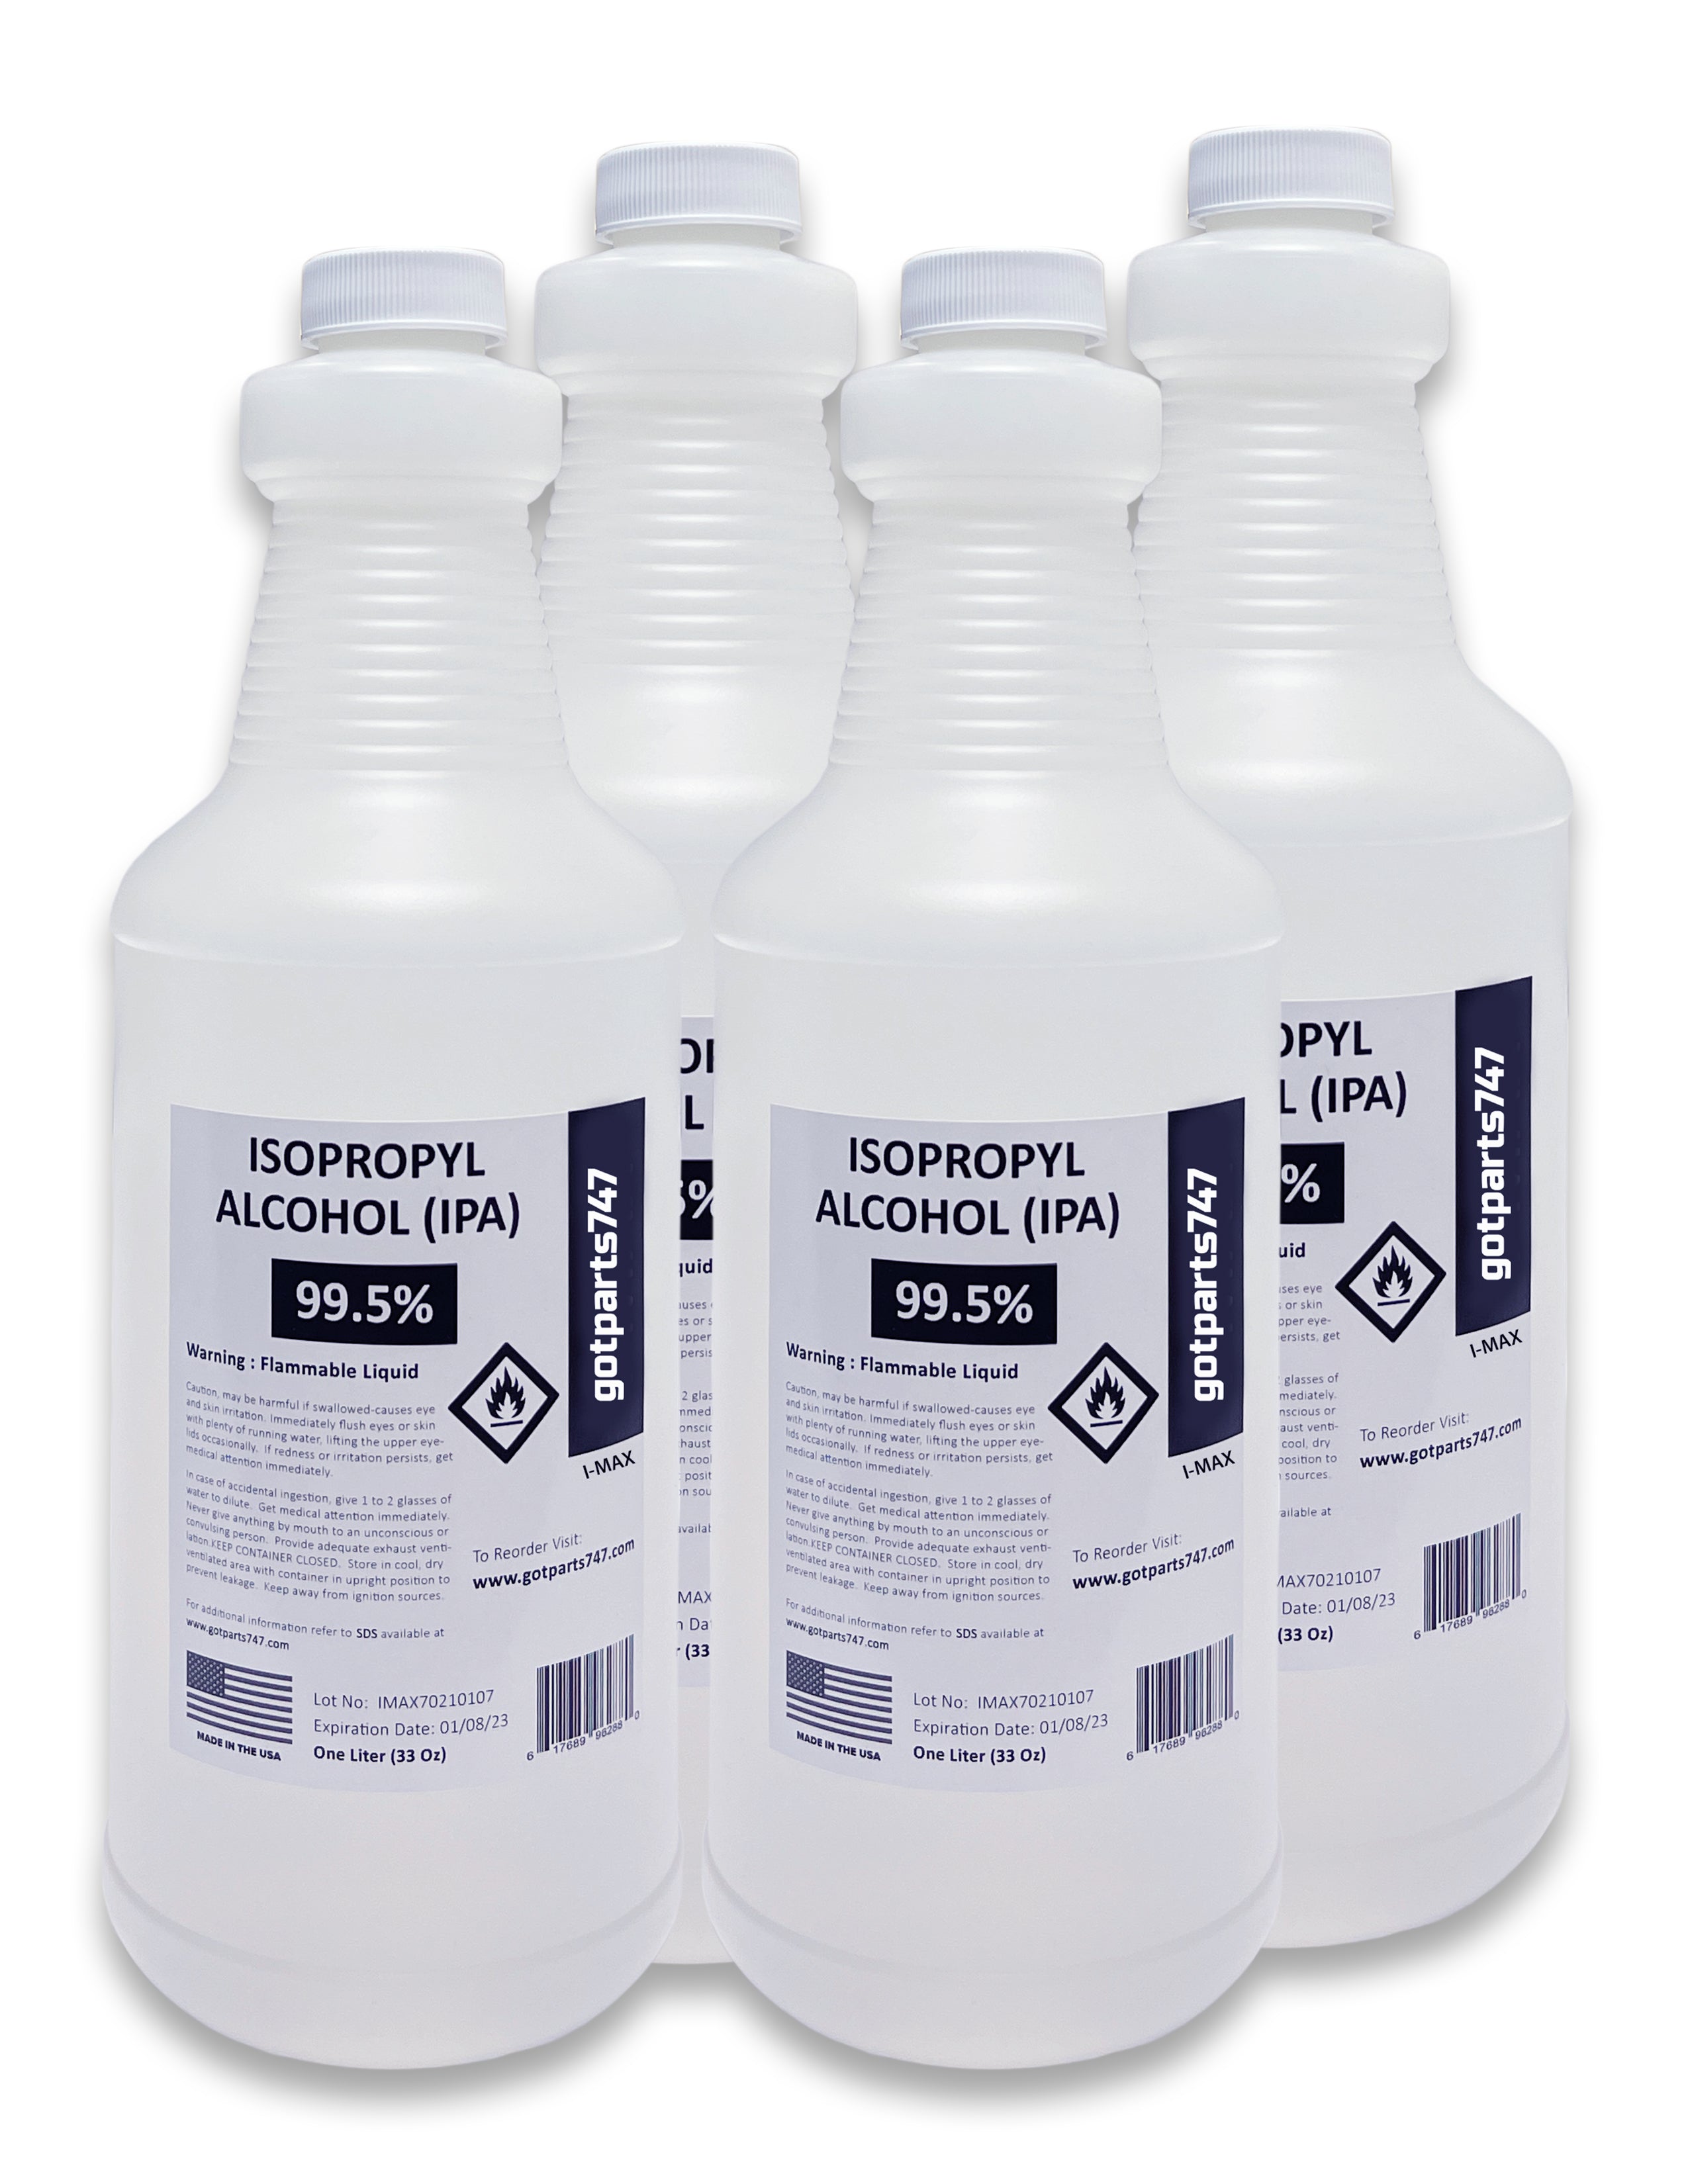   Basics 99% Isopropyl Alcohol For Technical Use